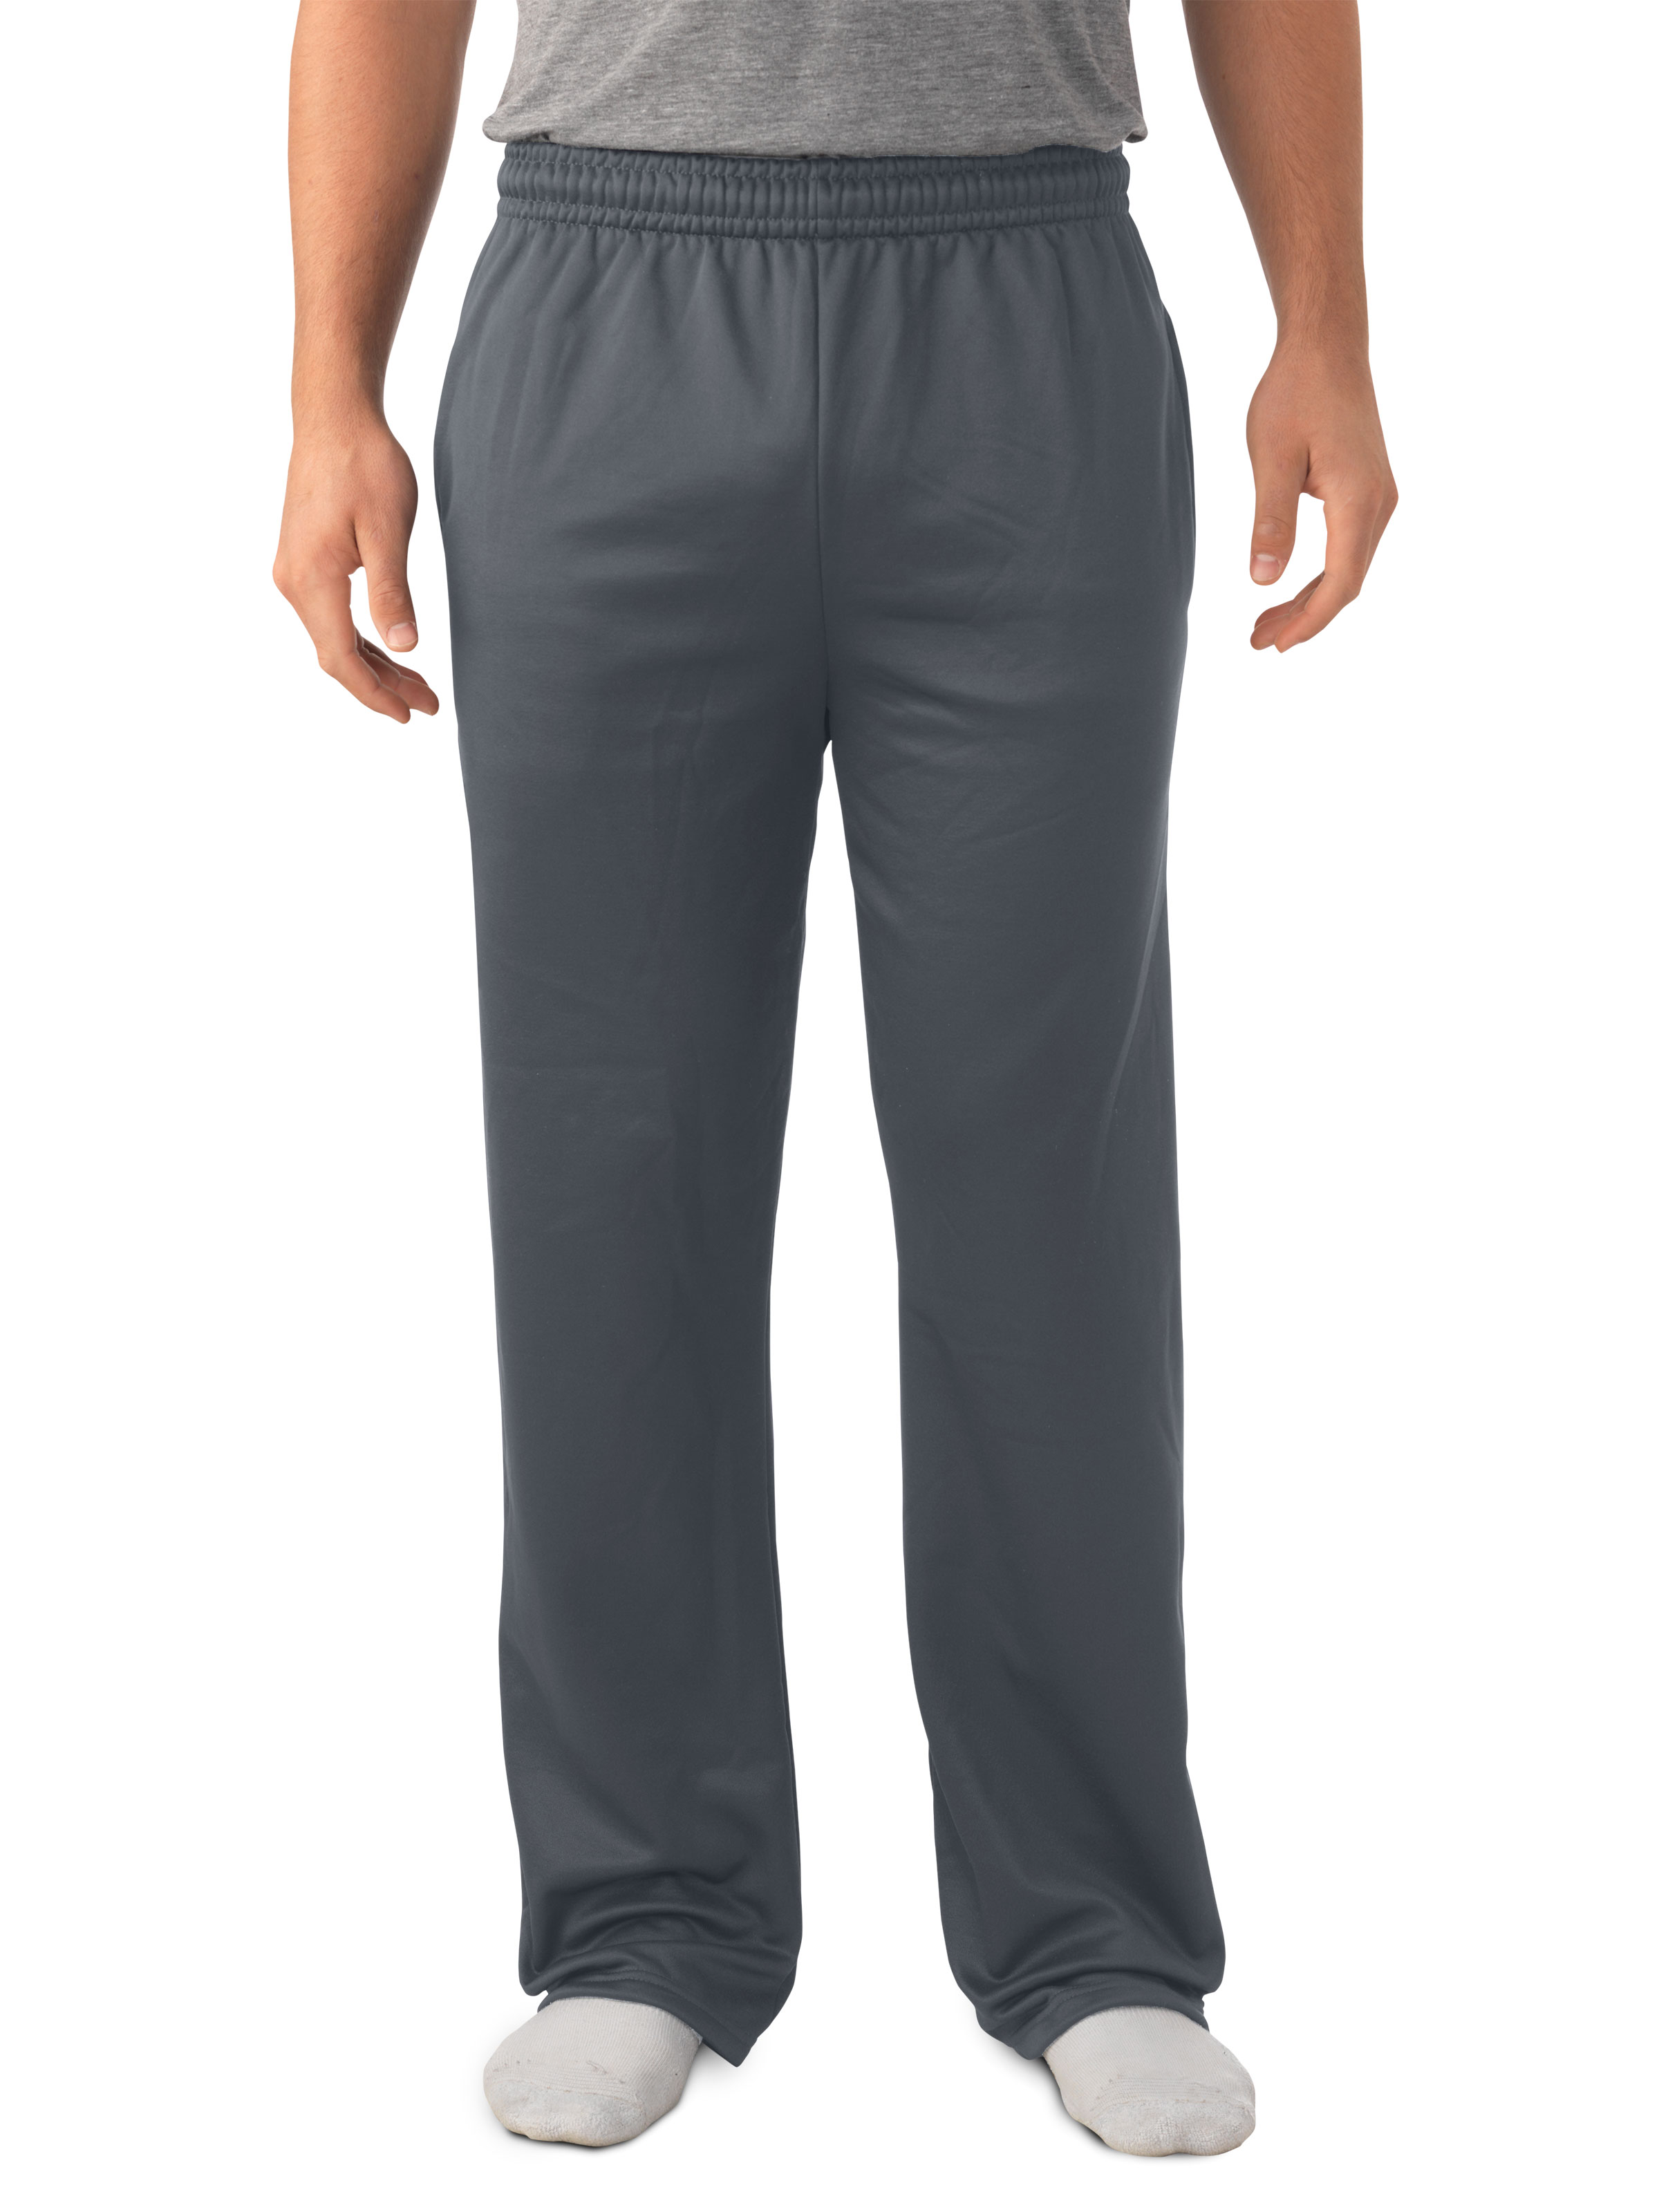 JERZEES® PF974MP DRI-POWER® Pocketed Open-Bottom Sweatpants